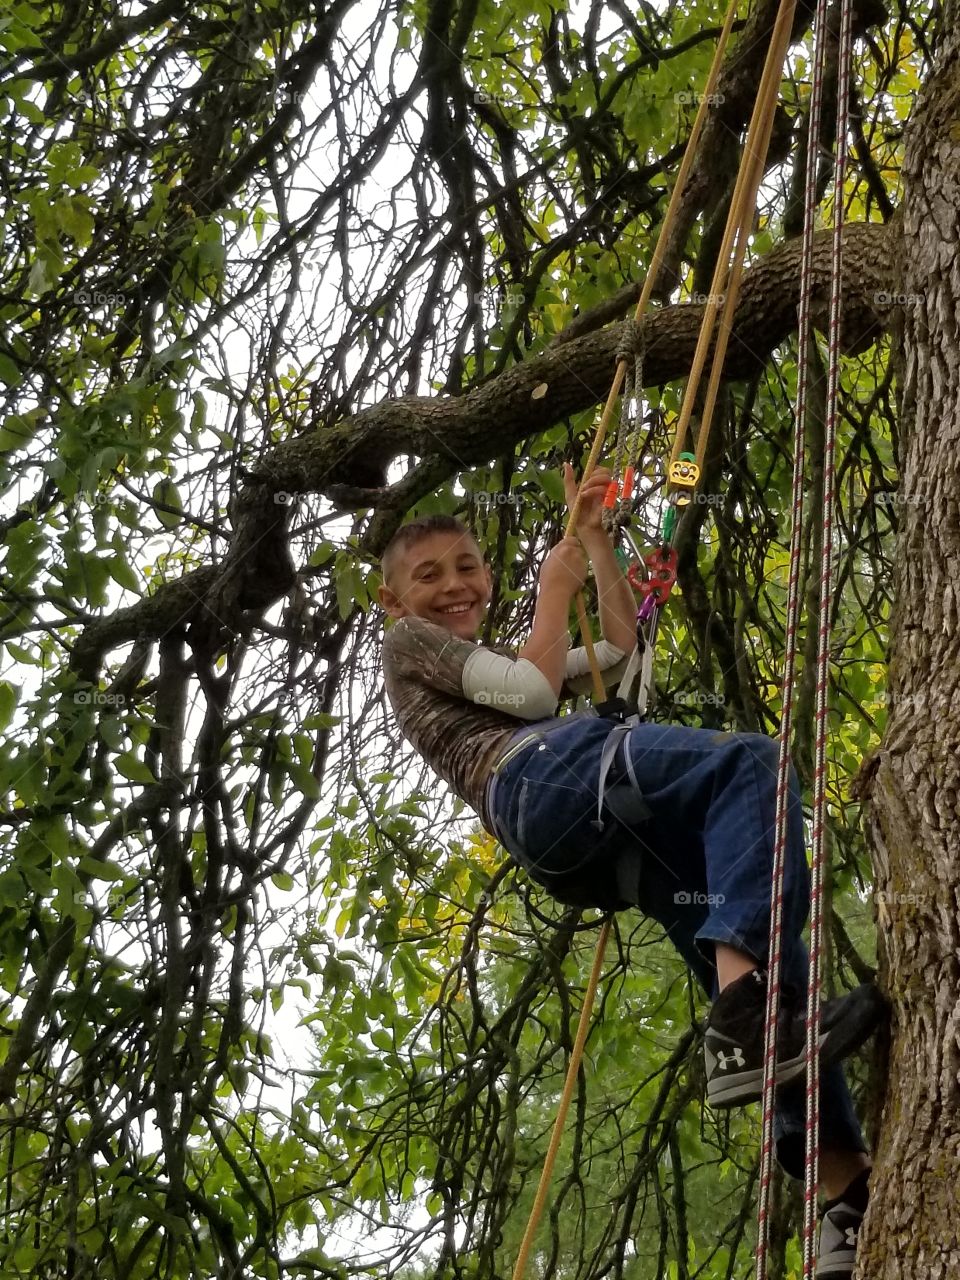 a  boy  in a tree having  fun